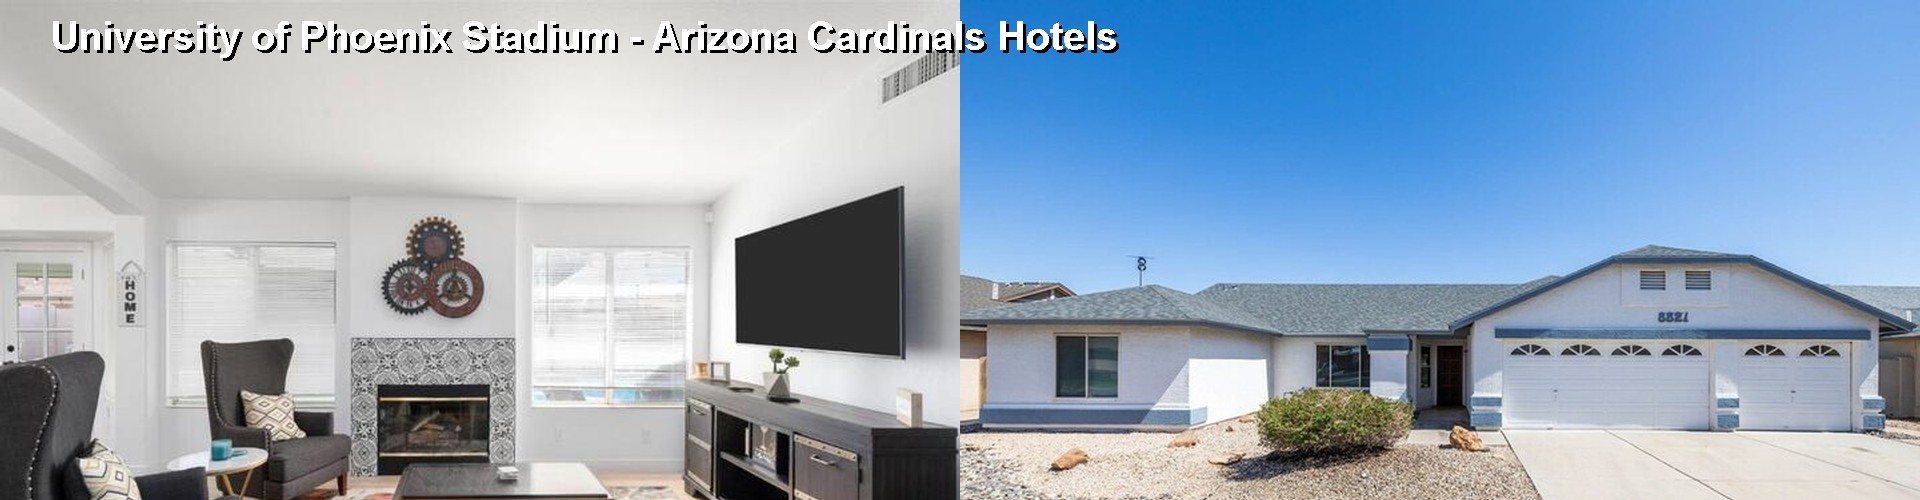 5 Best Hotels near University of Phoenix Stadium - Arizona Cardinals